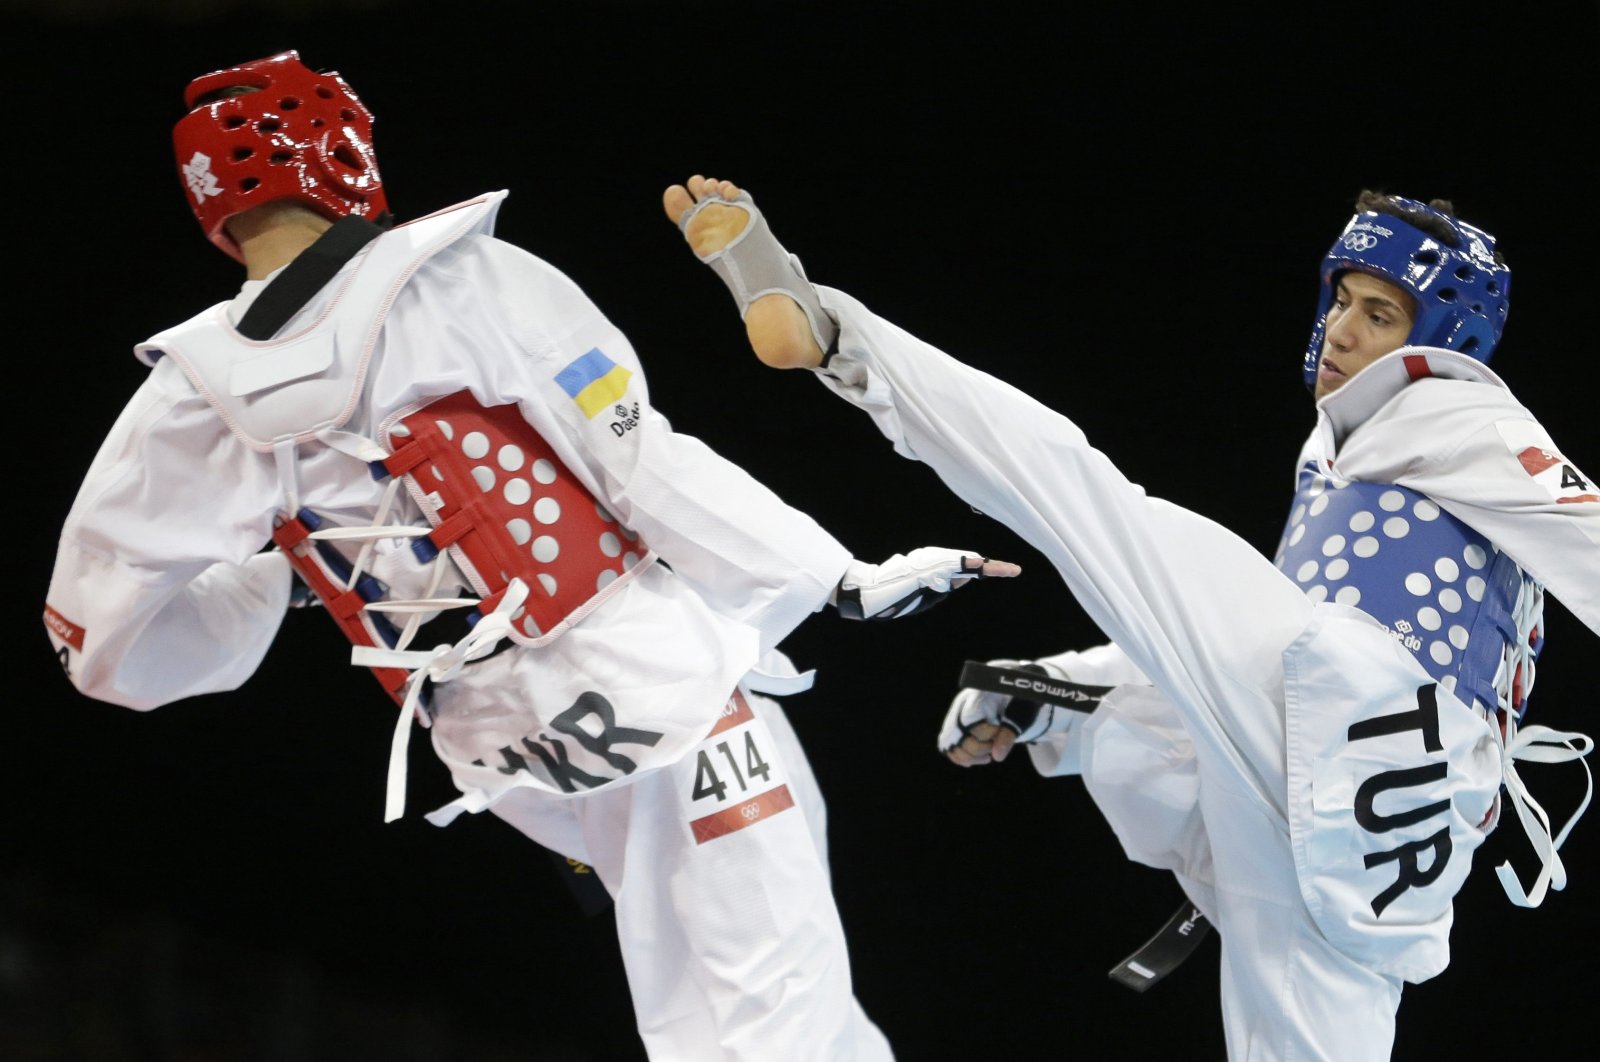 Türkiye&#039;s Servet Tazegul (R) fights Ukraine&#039;s Hryhorii Husarov during their quarterfinal round match in the men&#039;s 68 kg. taekwondo competition at the 2012 Summer Olympics, London, U.K., Aug. 9, 2012. (AP Photo)